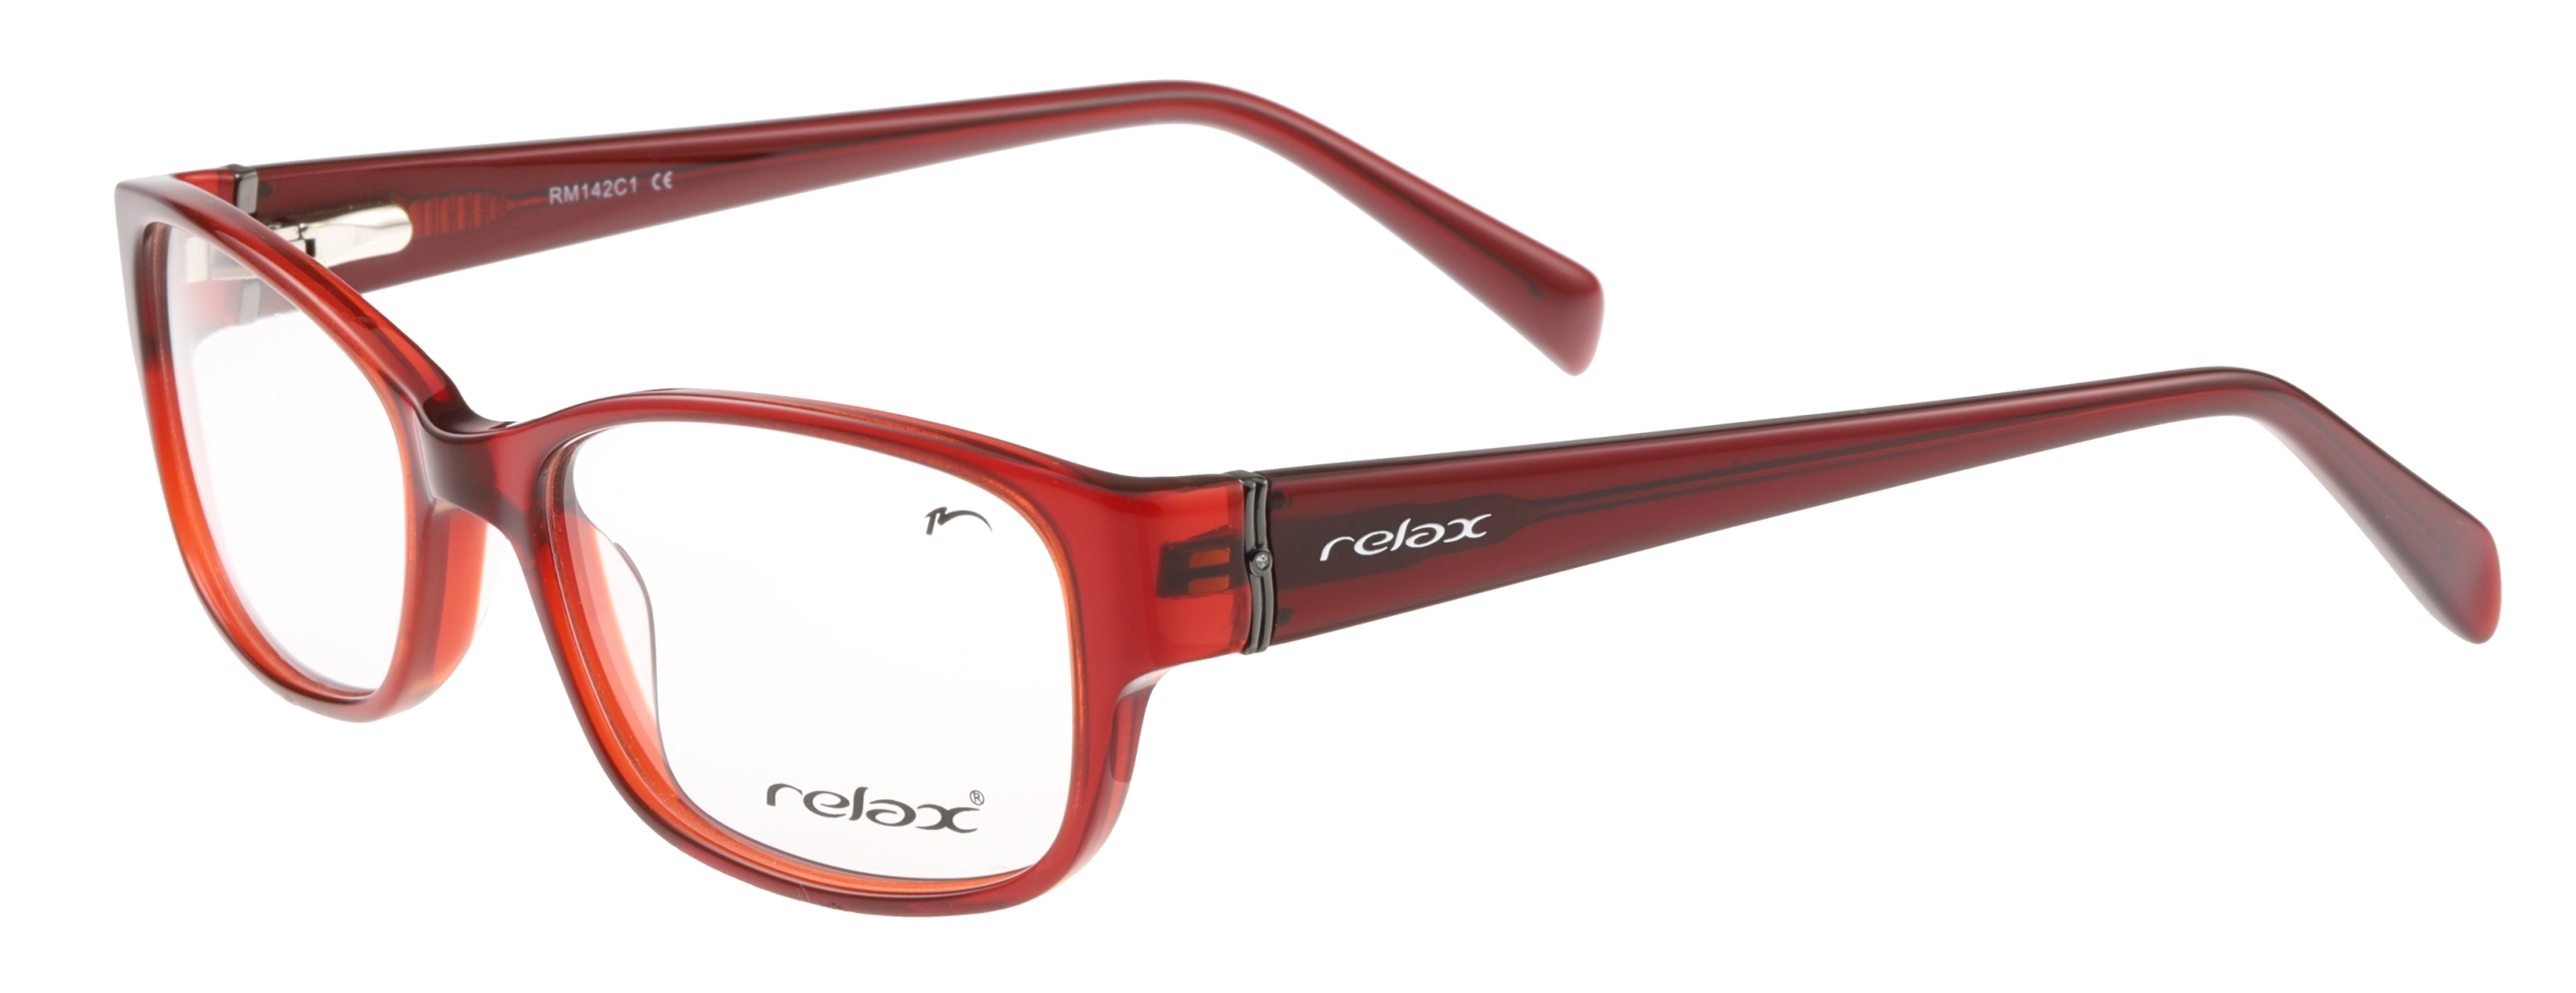 Optical frames Relax Venice RM142C1